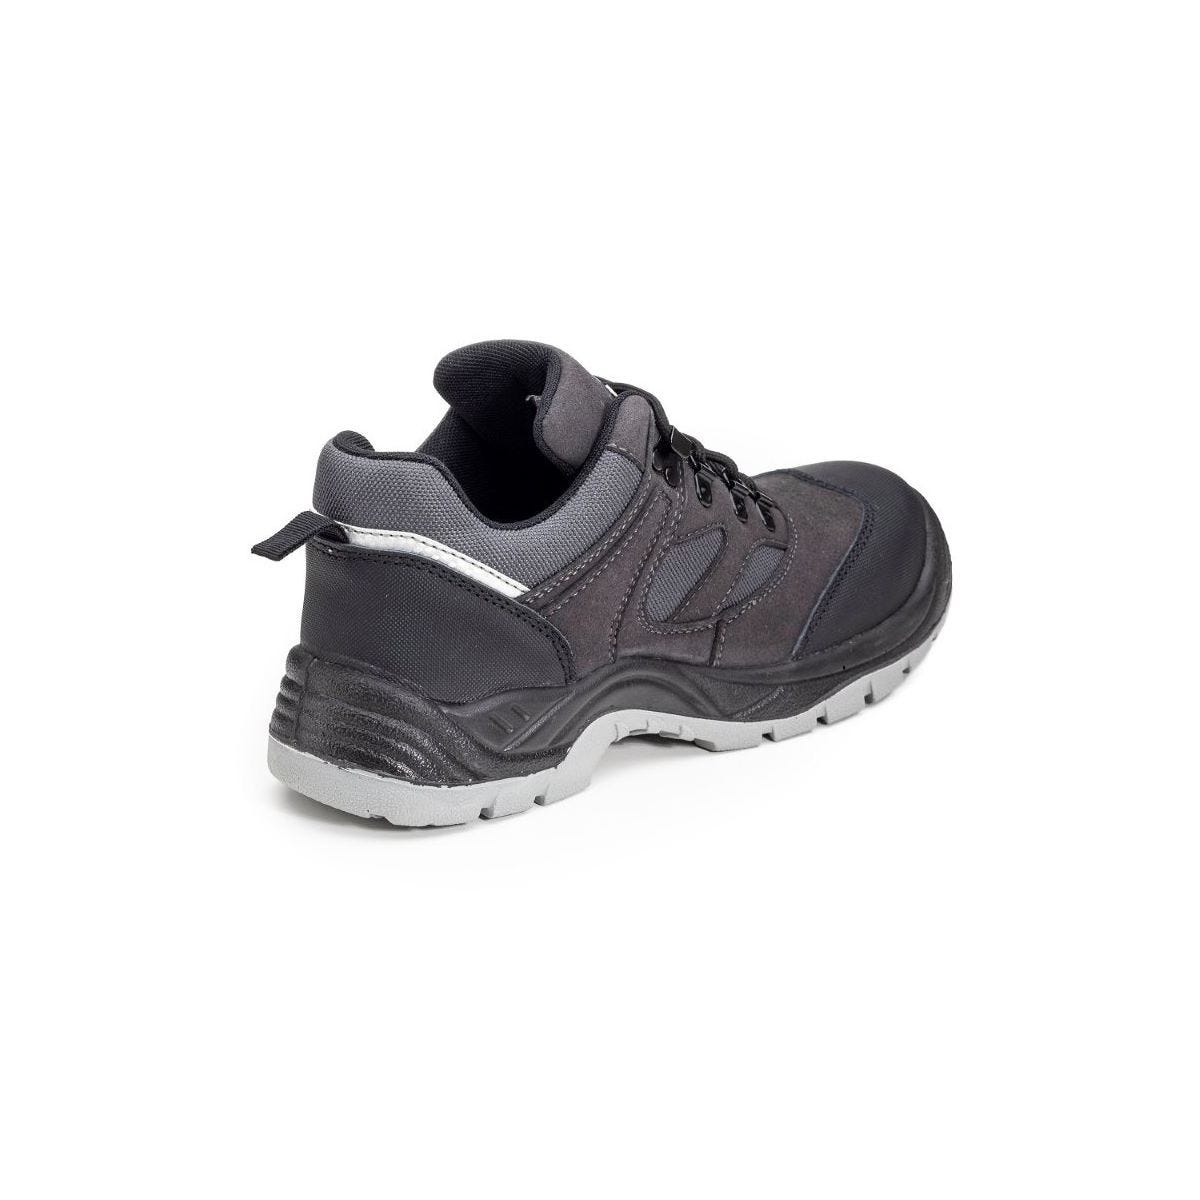 Chaussures sécurité SILVER Basse Anthracite - Coverguard - Taille 40 2